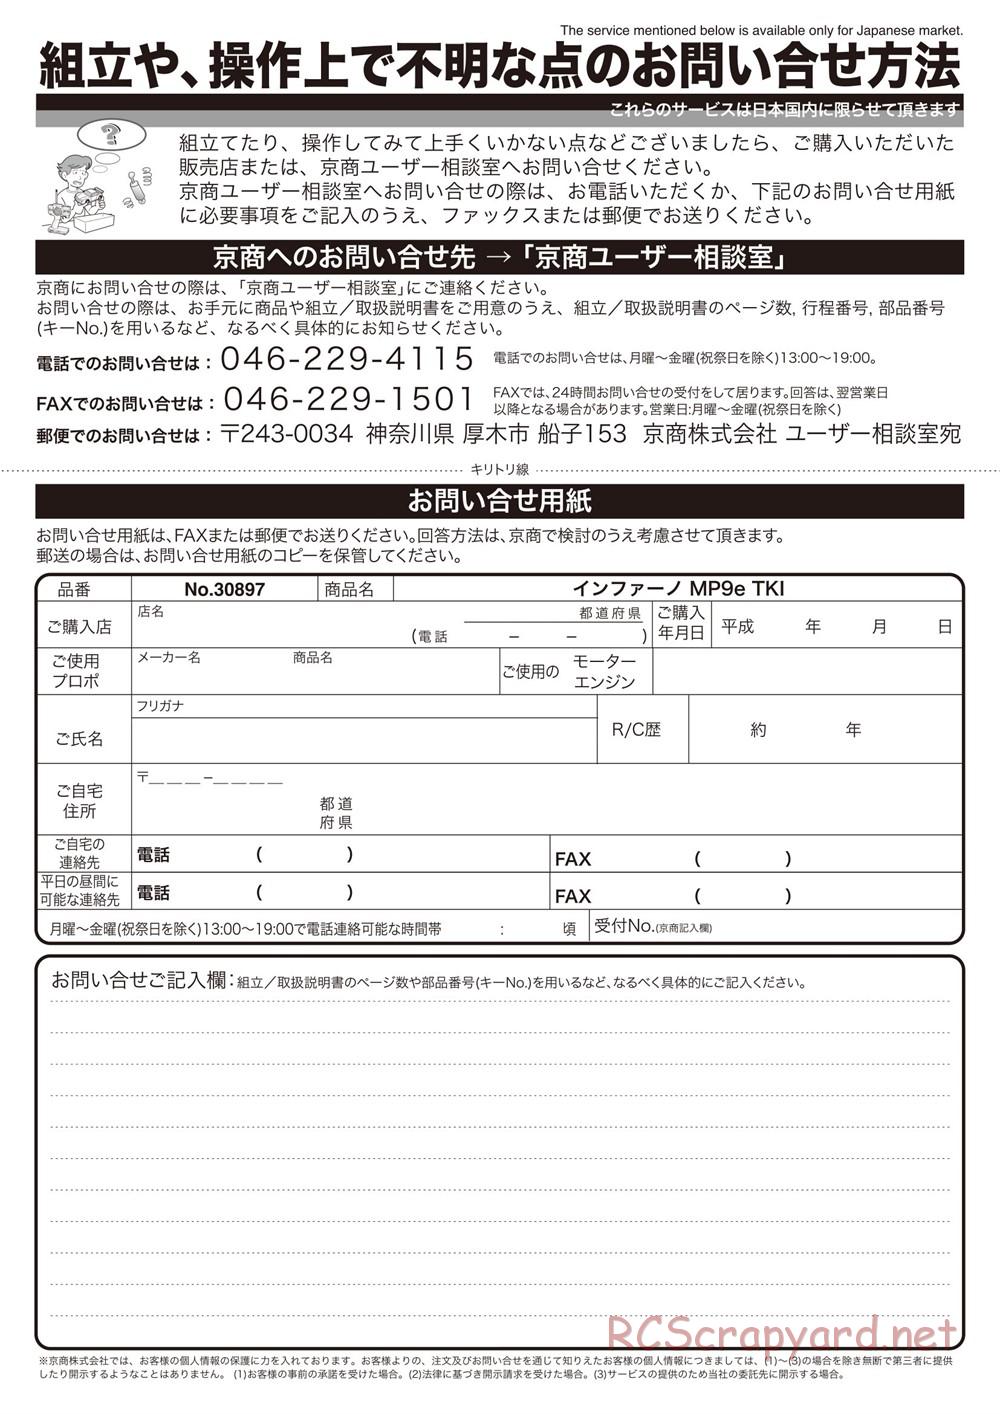 Kyosho - Inferno MP9e TKI - Manual - Page 50